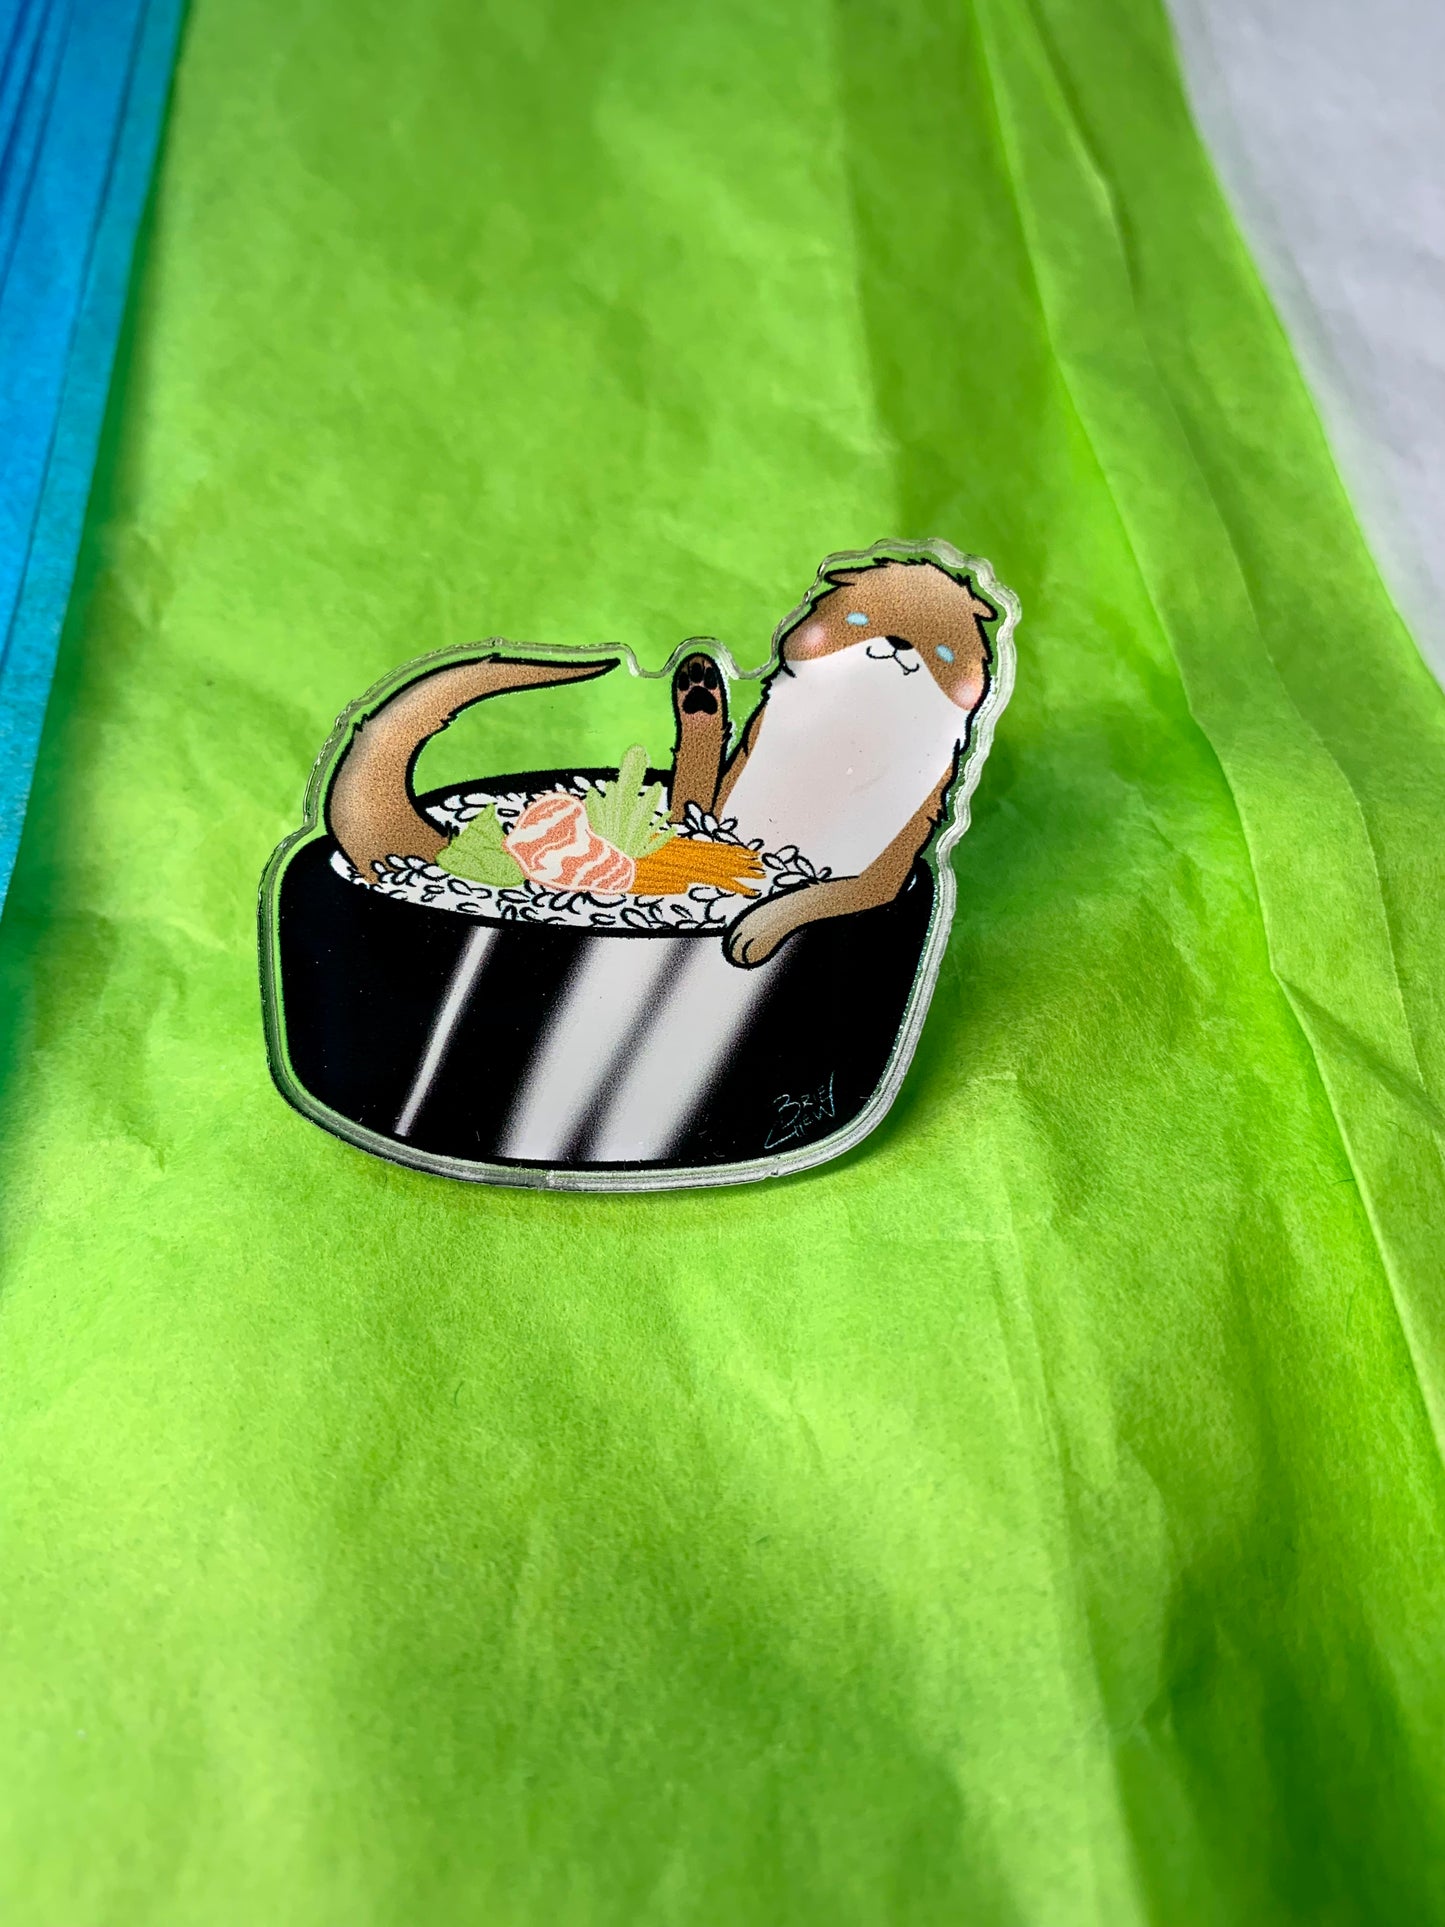 Sushi Otter Acrylic Pin